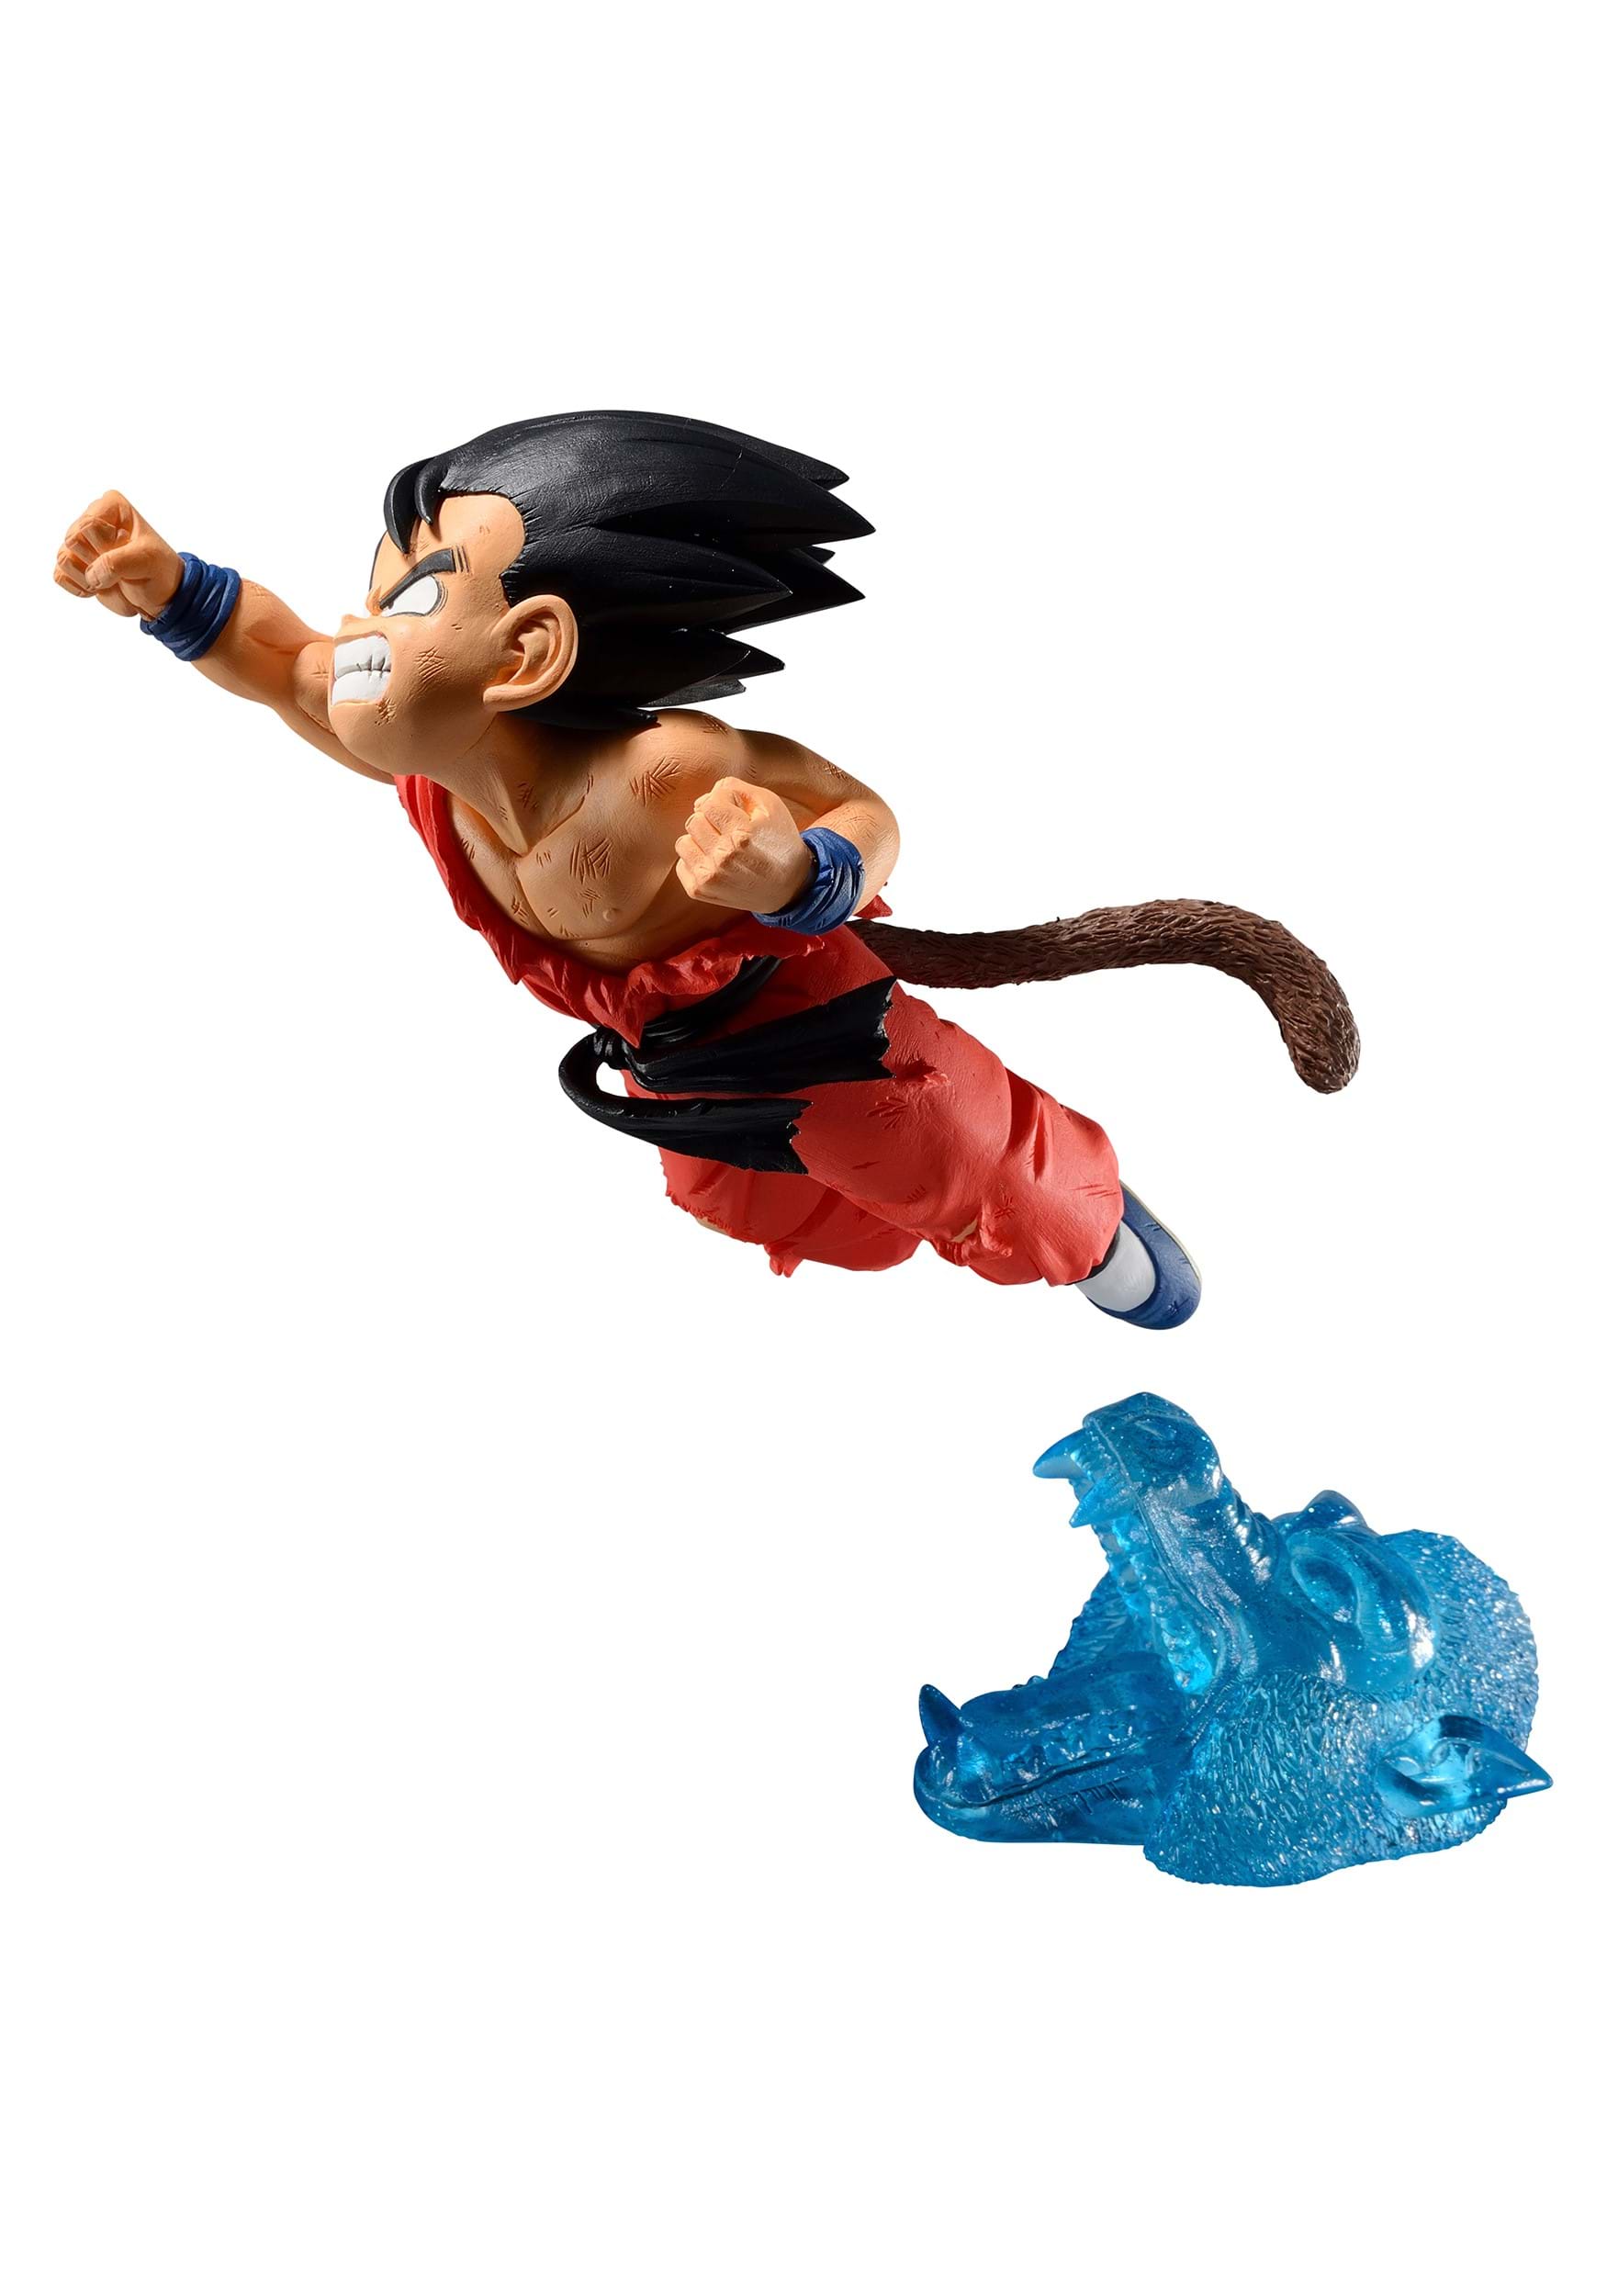  Banpresto - Dragon Ball Super G x Materia The Goku Black Figure  : Toys & Games